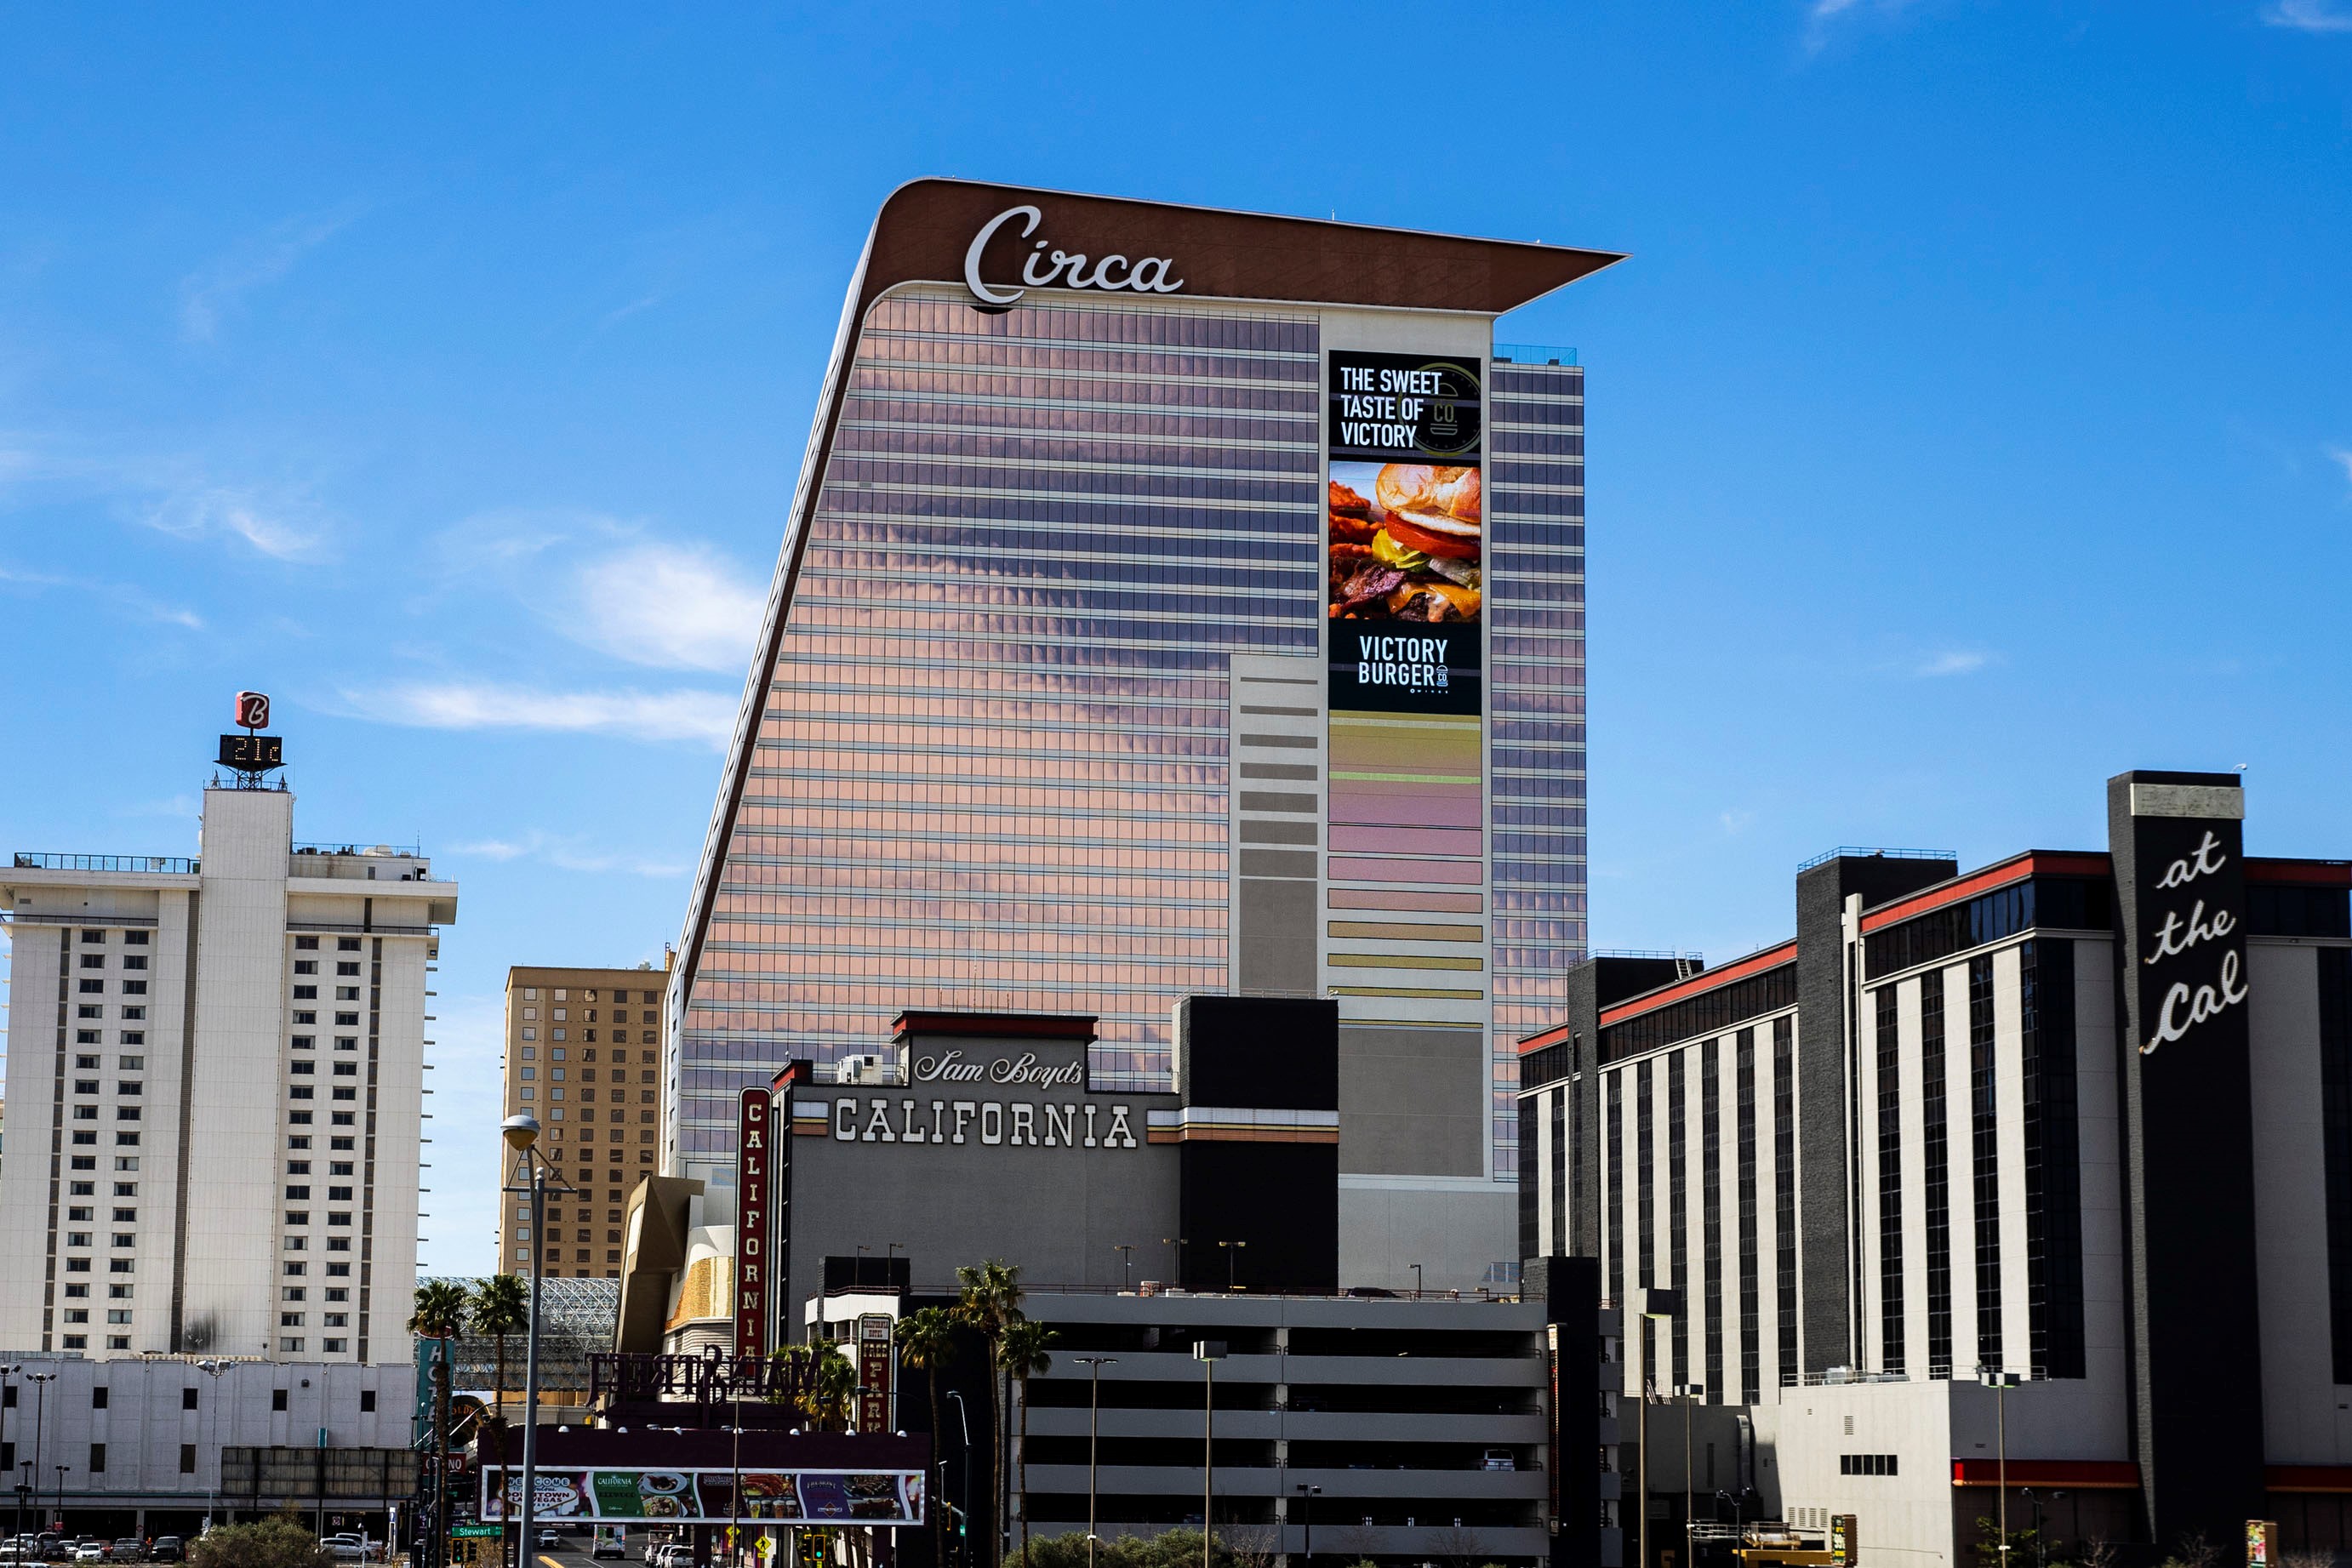 Circa membawa ekspansi teknologi tinggi ke pusat kota Las Vegas